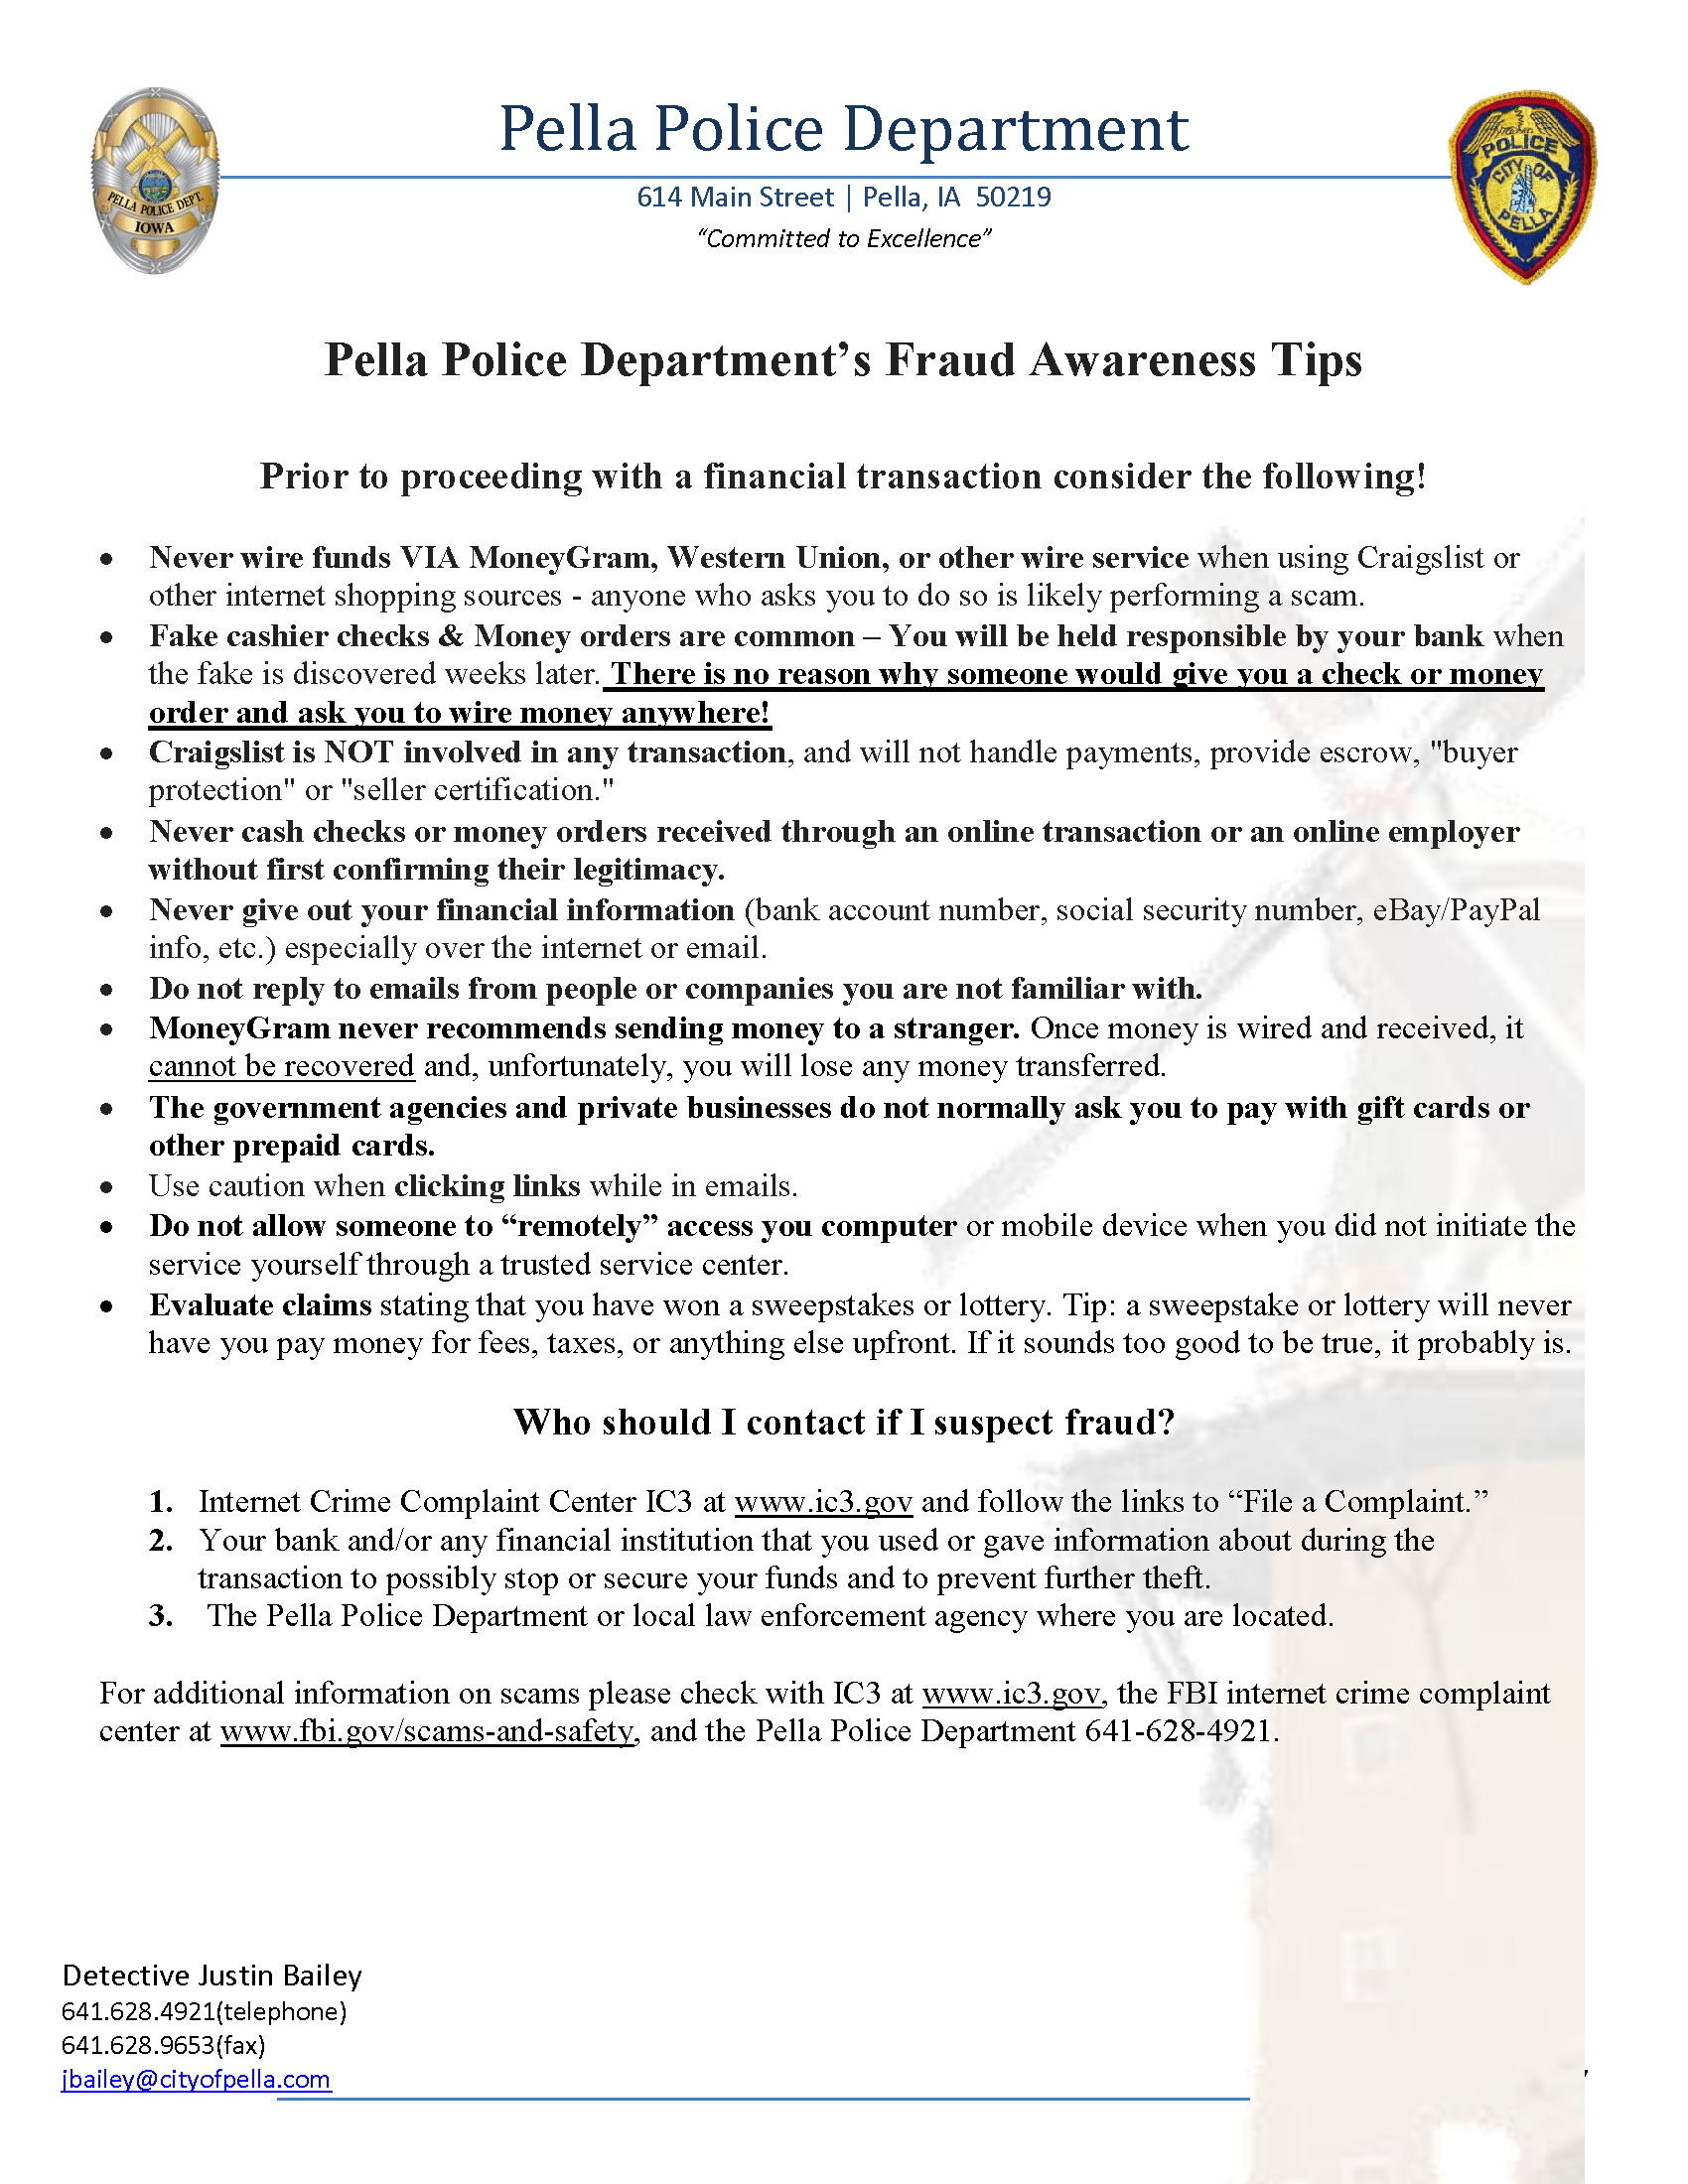 Pella Police Dept Fraud Tips Page 1